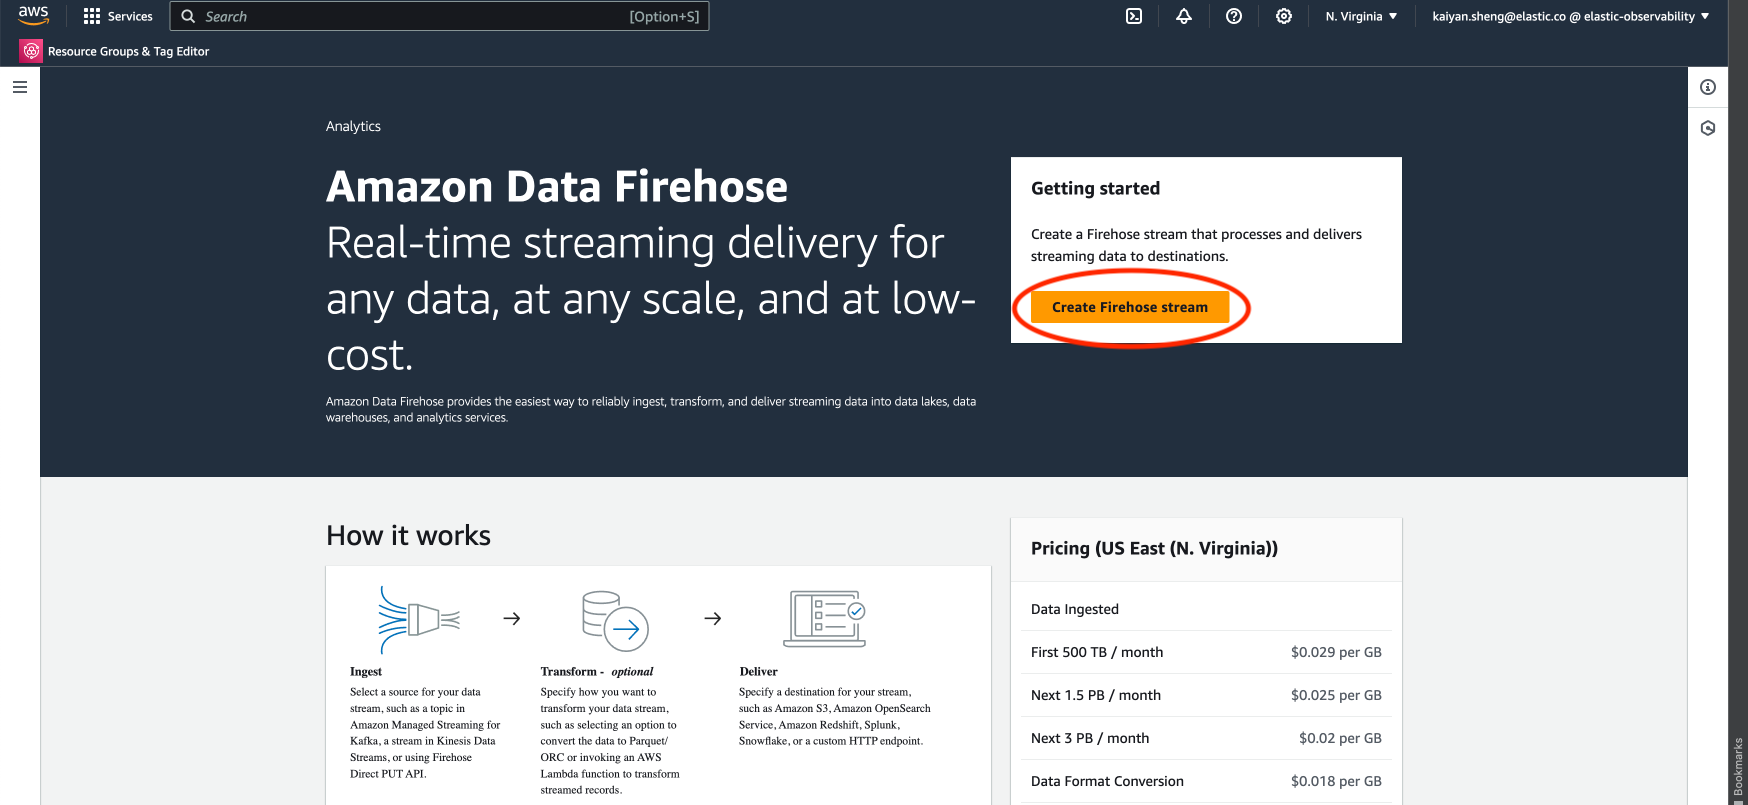 Amazon Data Firehose